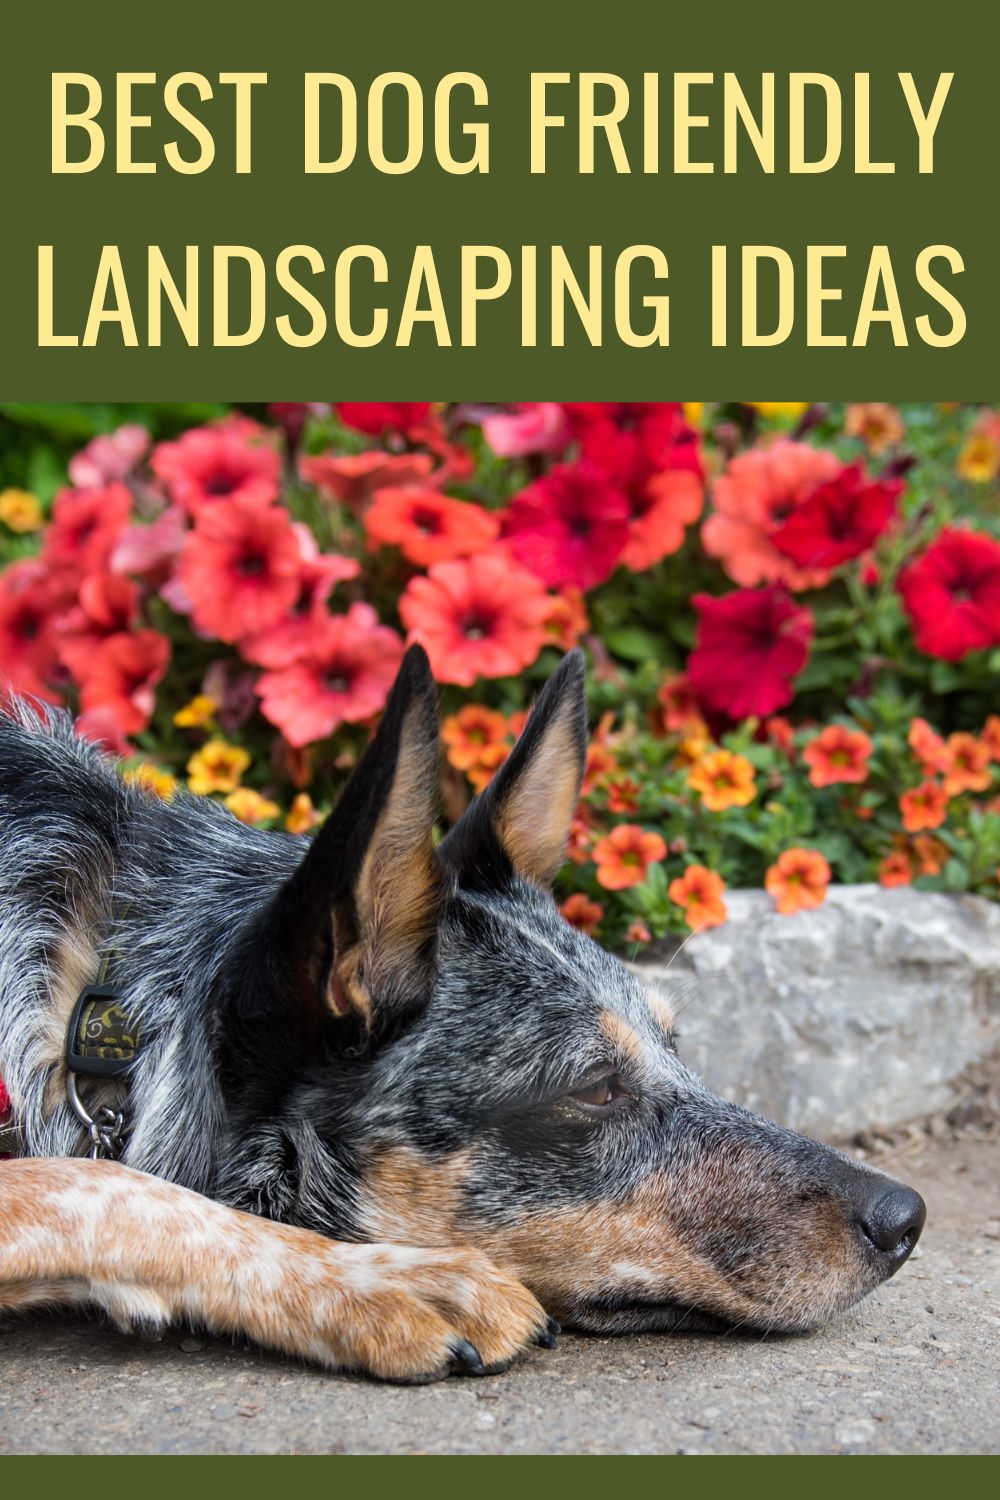 Best dog friendly landscaping ideas.